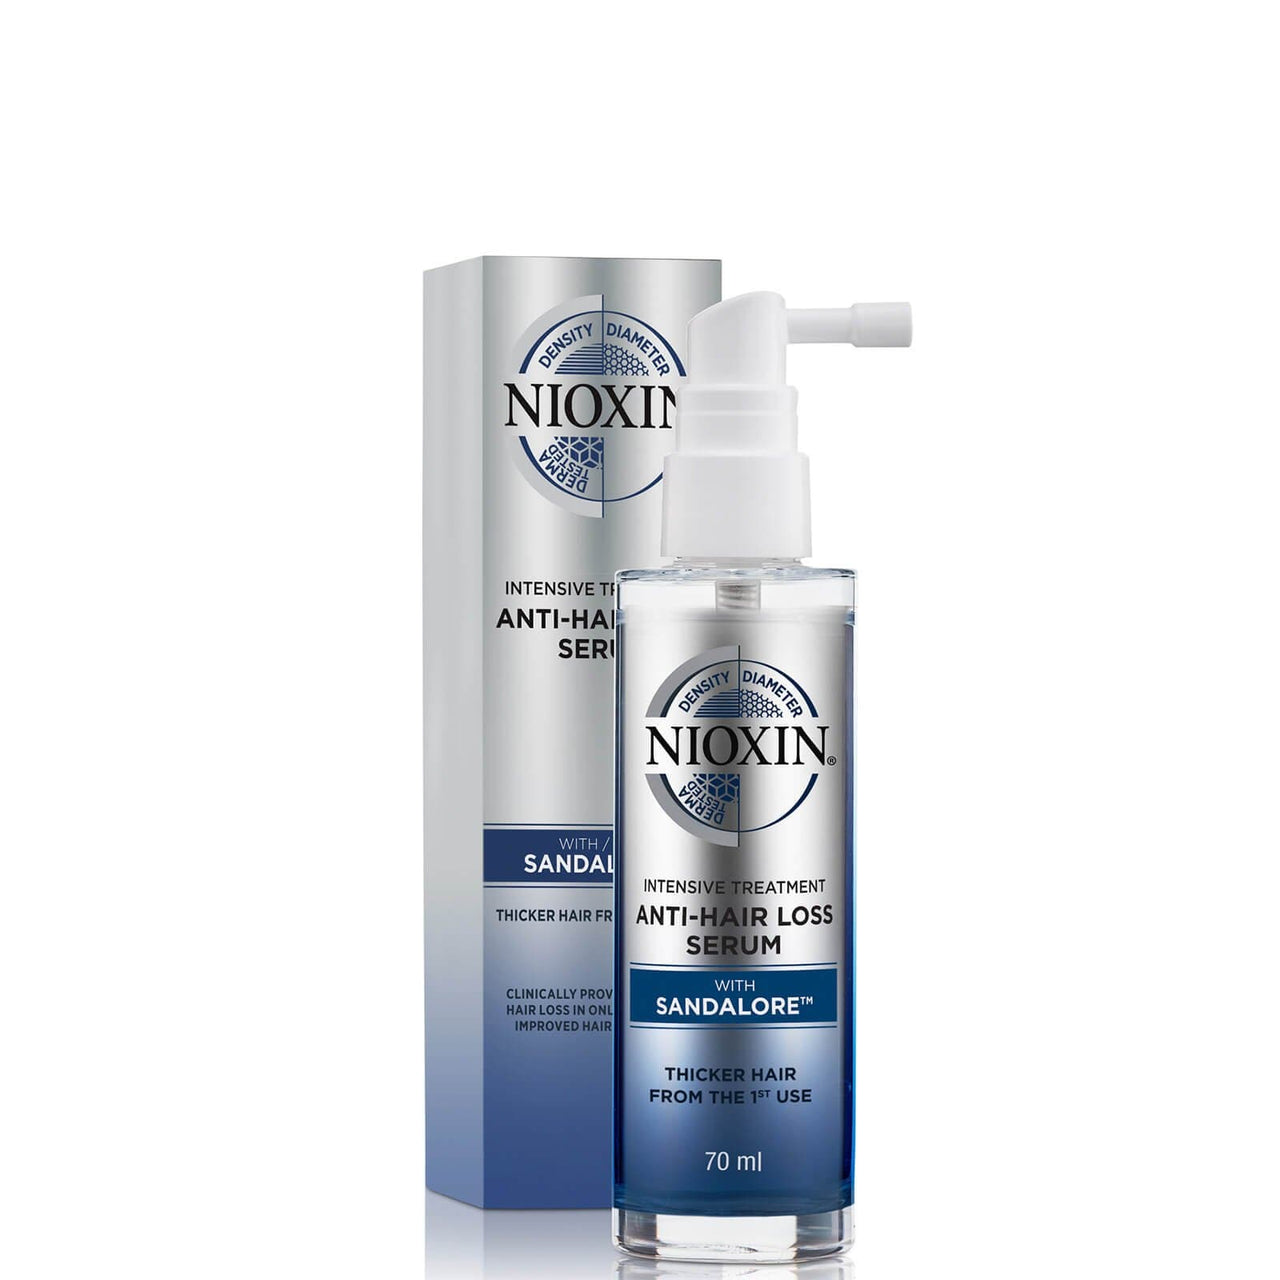 Sandalore NIOXIN Anti-Hair Loss Treatment